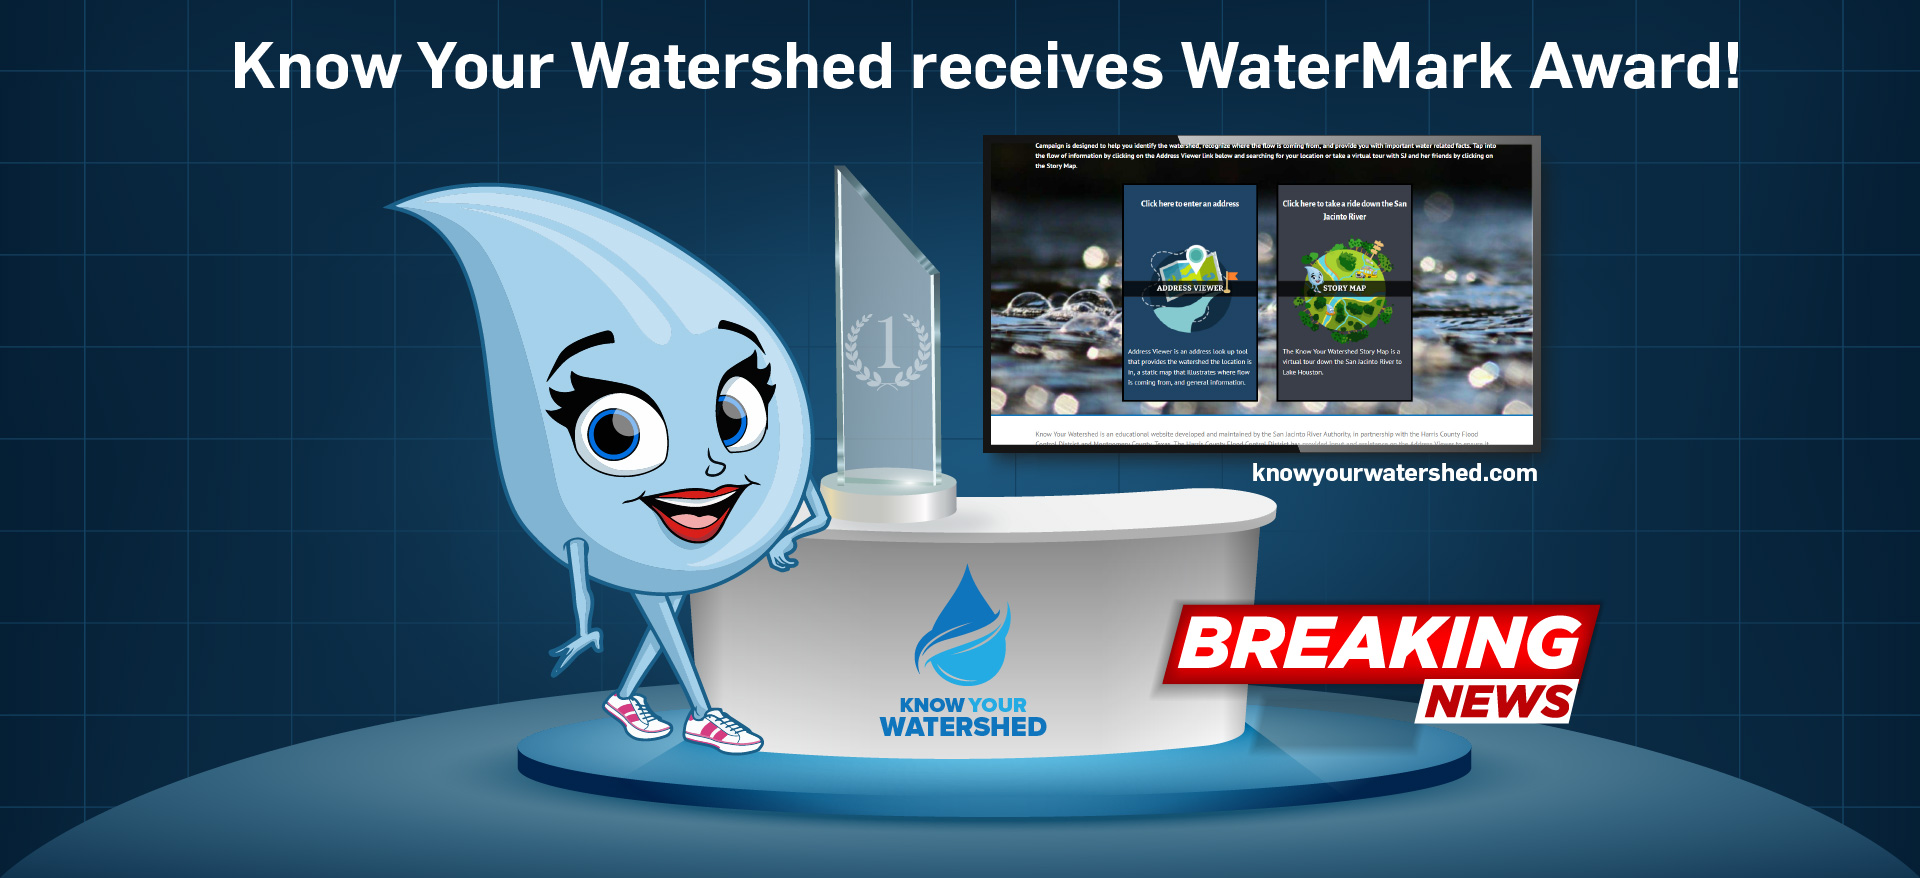 WaterMark Award